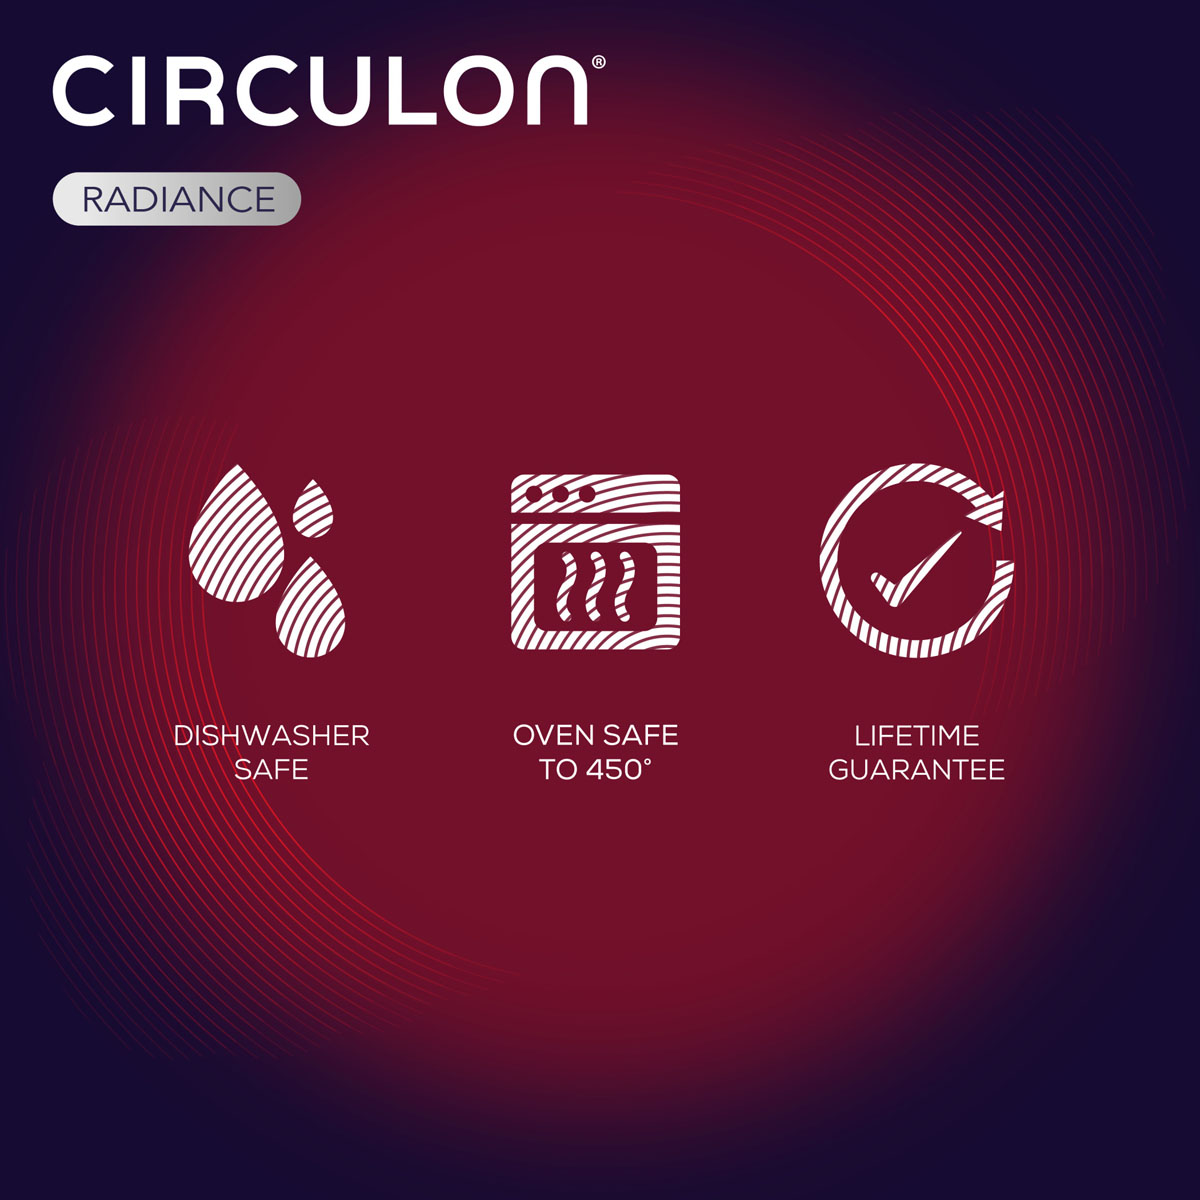 Circulon(R) Radiance 3qt. Hard-Anodized Saucepan